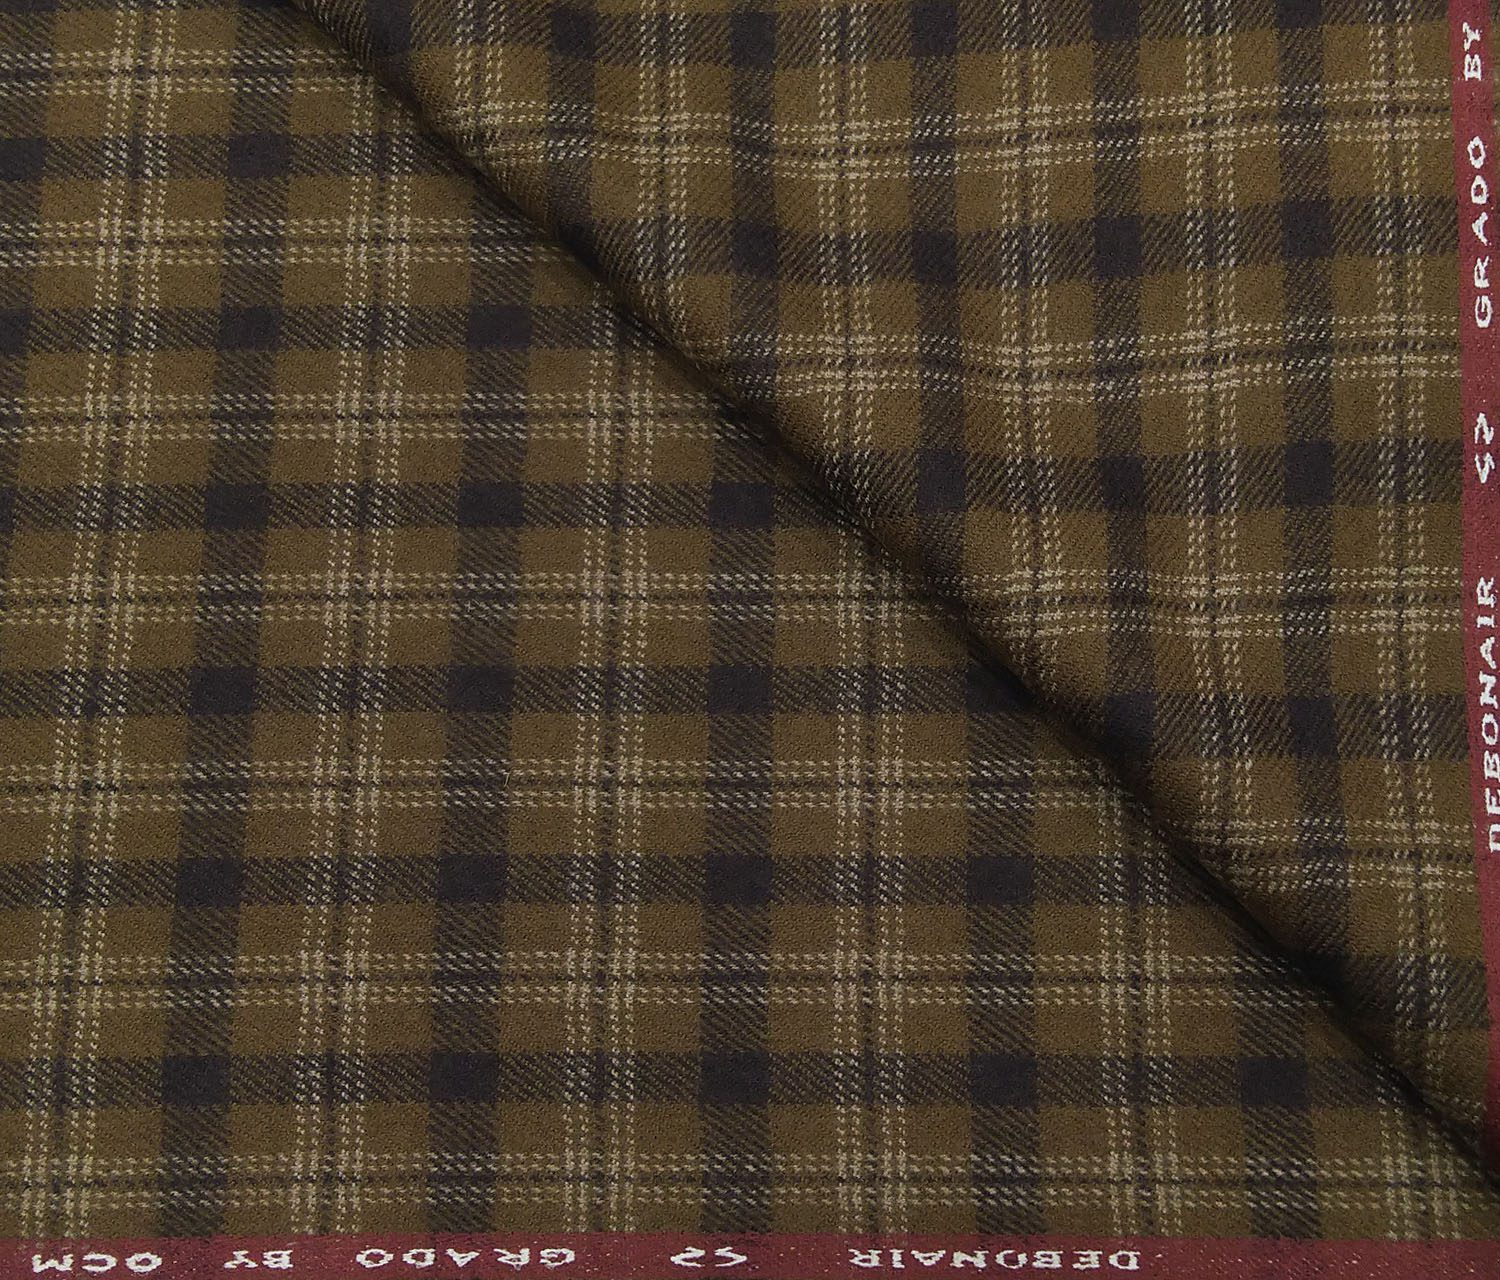 OCM Men's Wool White Checks 2 Meter Unstitched Tweed  Jacketing & Blazer Fabric (Light Brown)